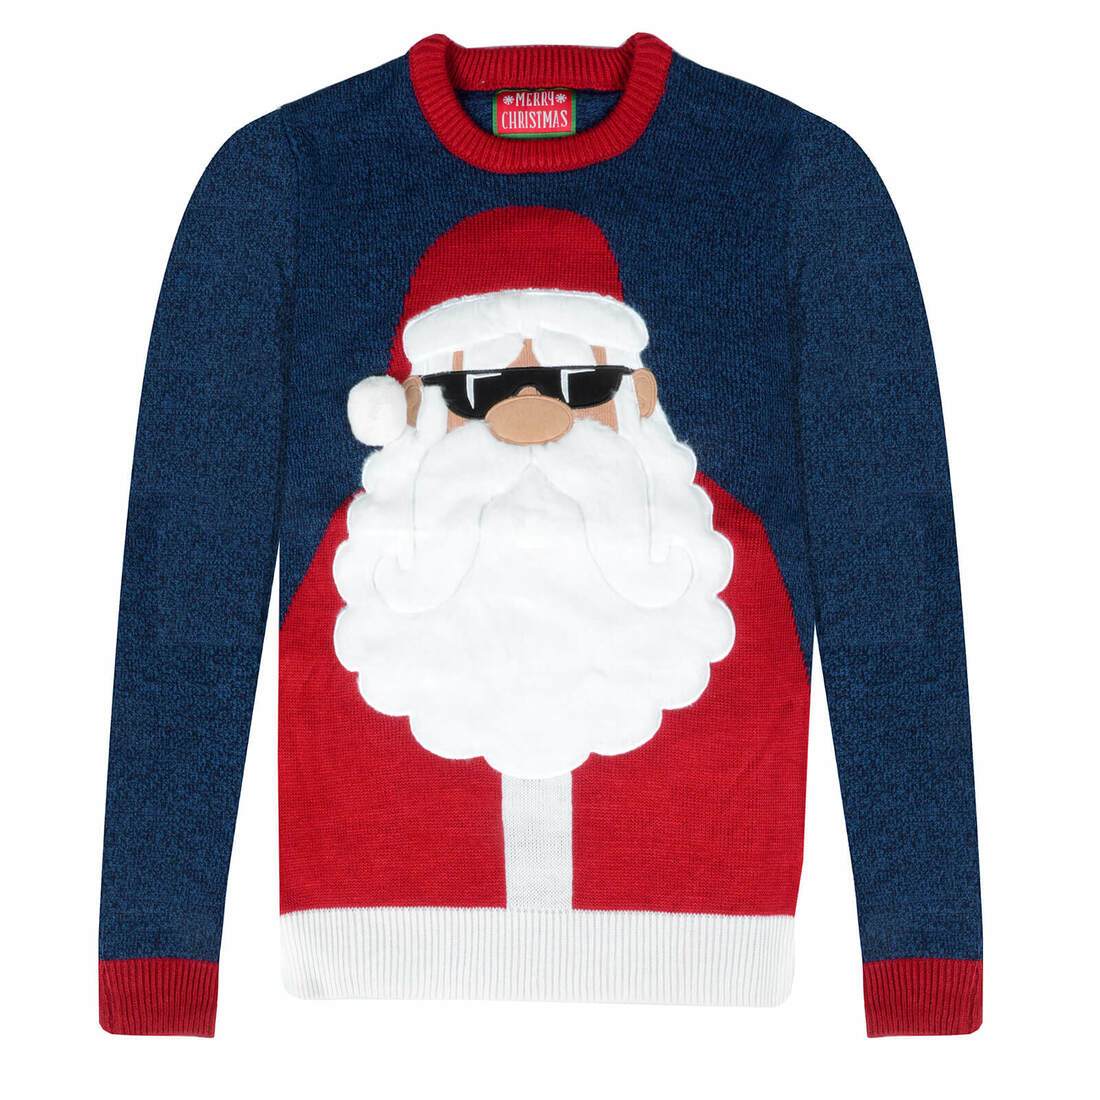 Mr Crimbo Mens Santa Claus Sunglasses Christmas Jumper Marl - MrCrimbo.co.uk -SRG1A15762-36A_A - Navy -festive knit